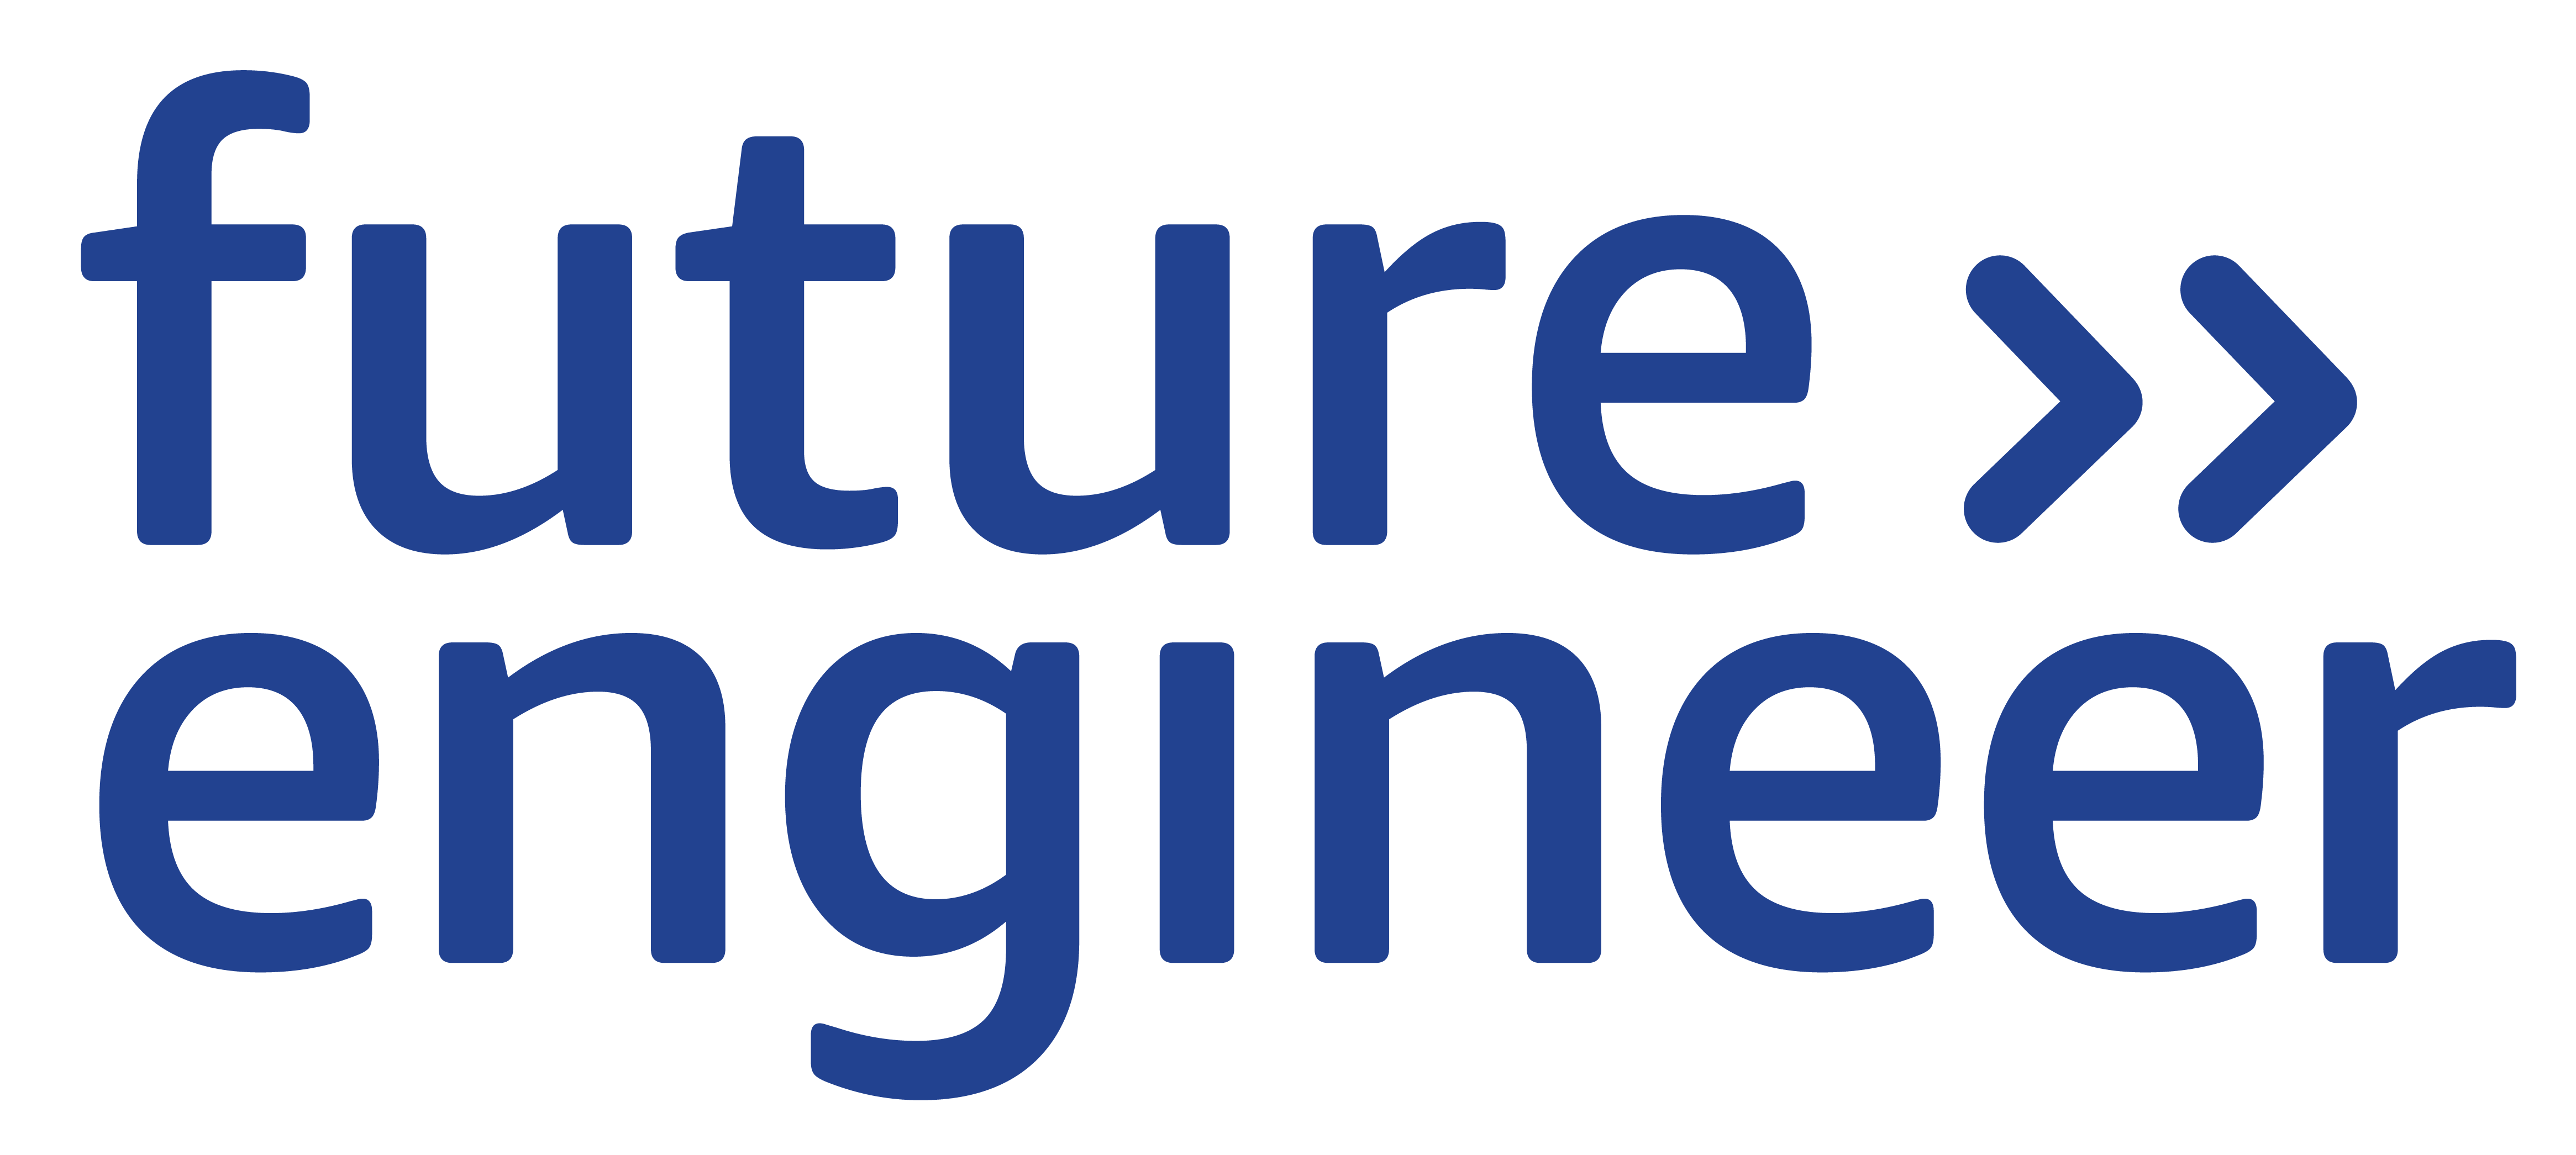 Amazon future engineer Logo